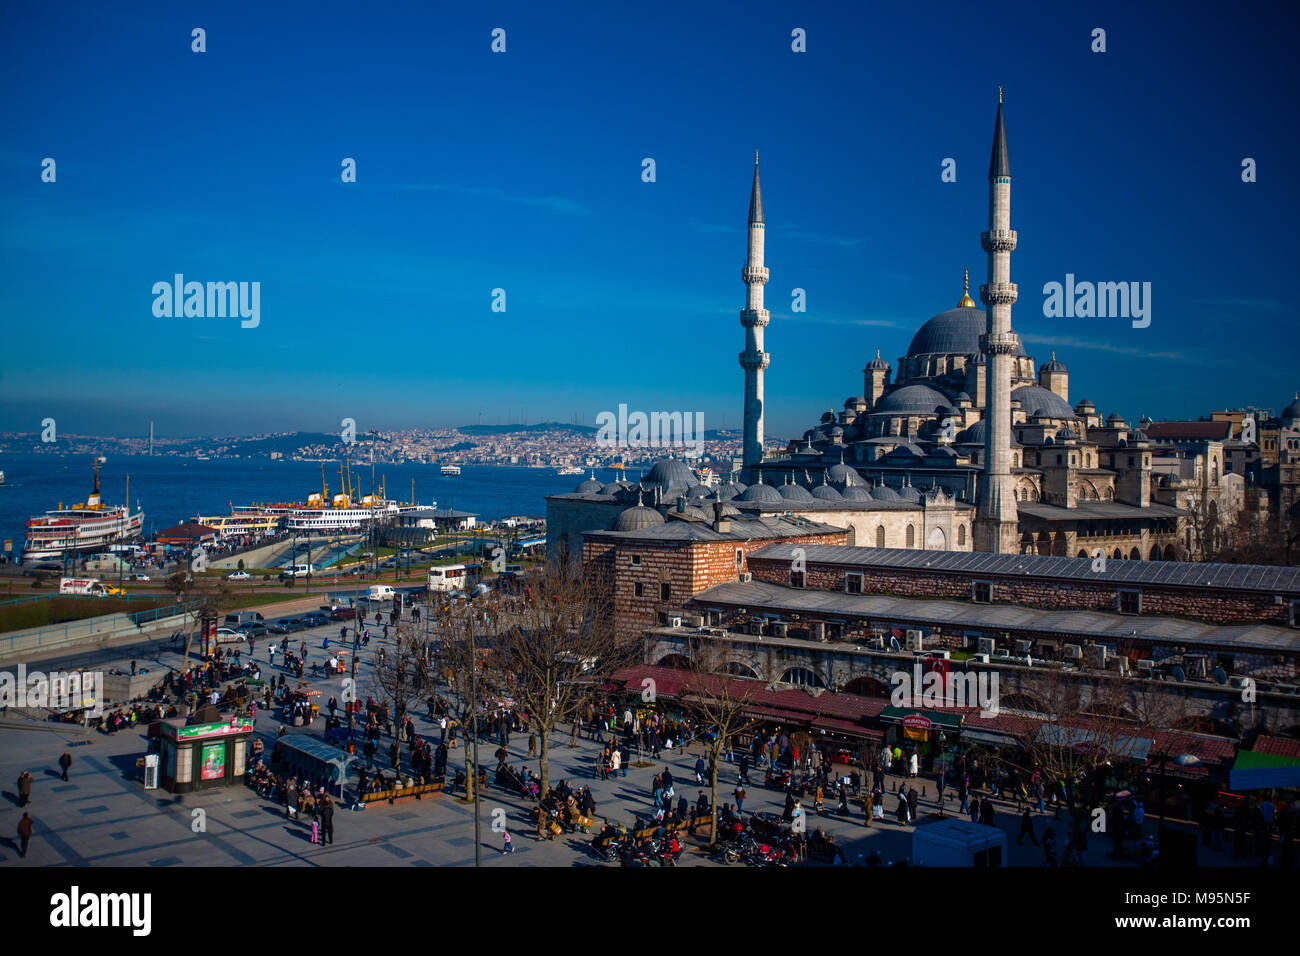 Einen atemberaubenden Blick auf die yeni Camii in Istanbul, Türkei. Stockfoto